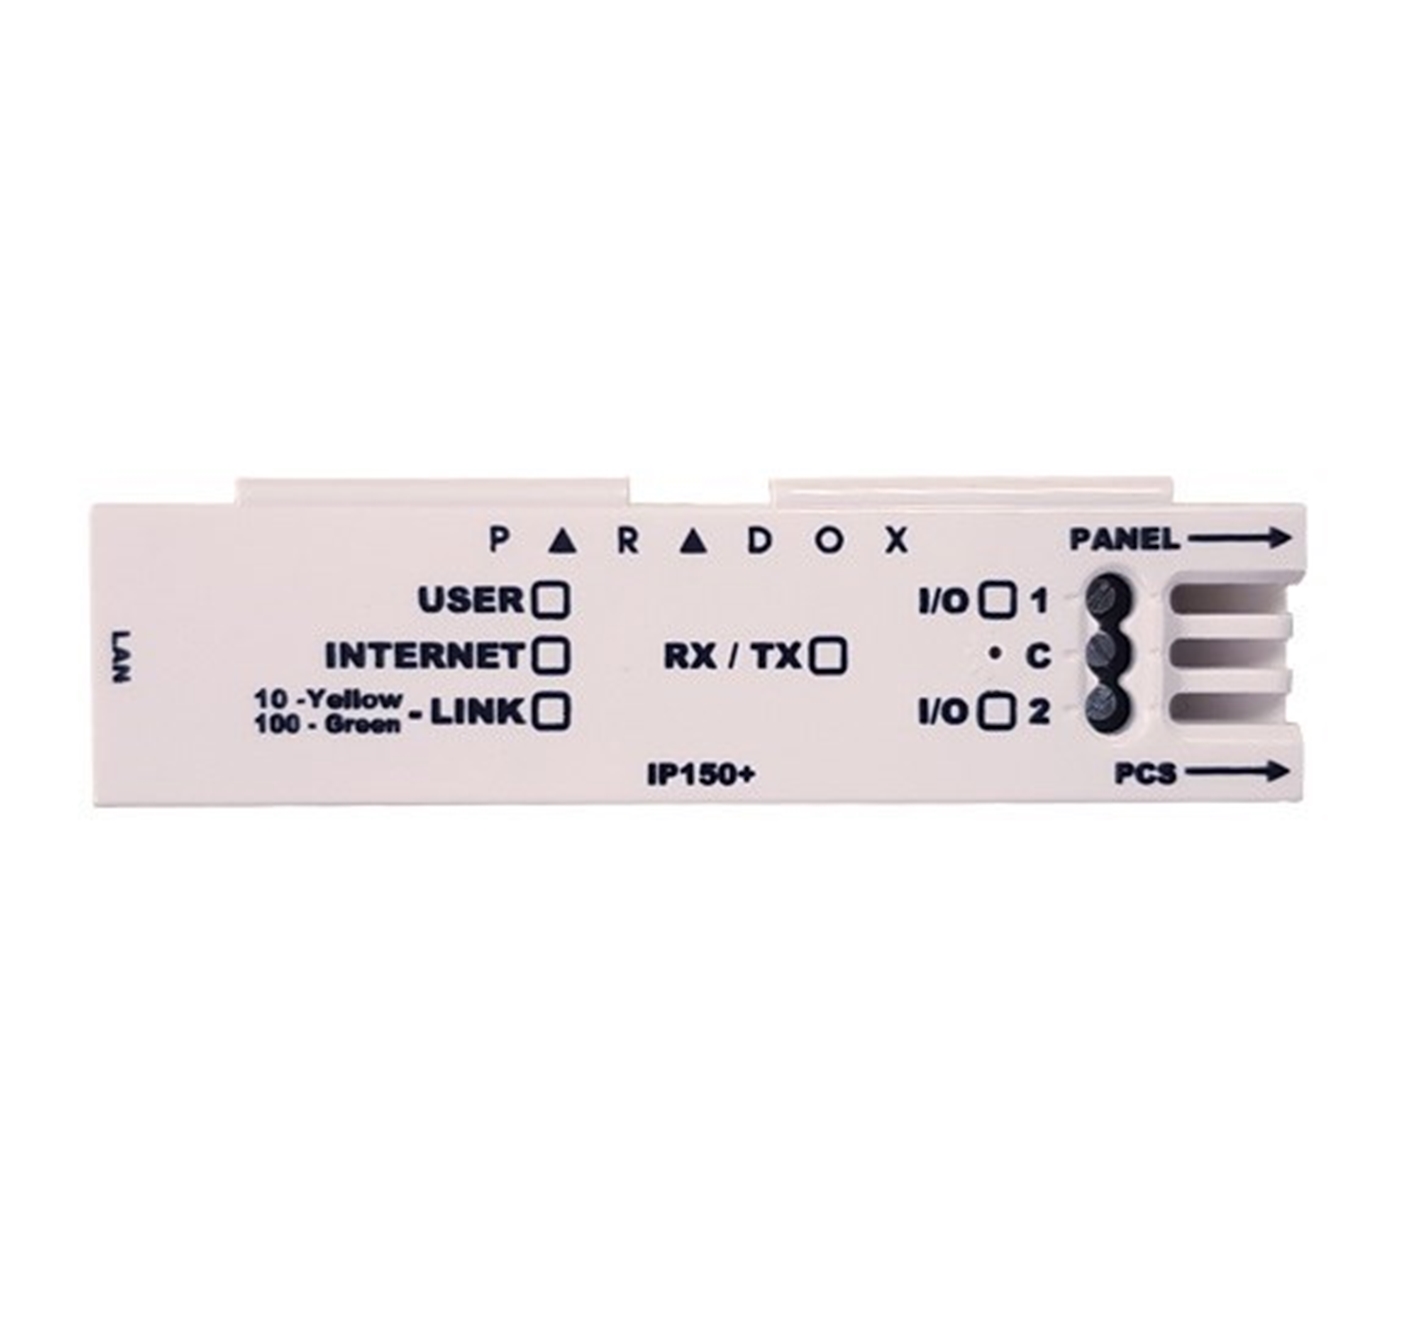 Hiện chi thiết của Module kết nối Internet PARADOX IP150+